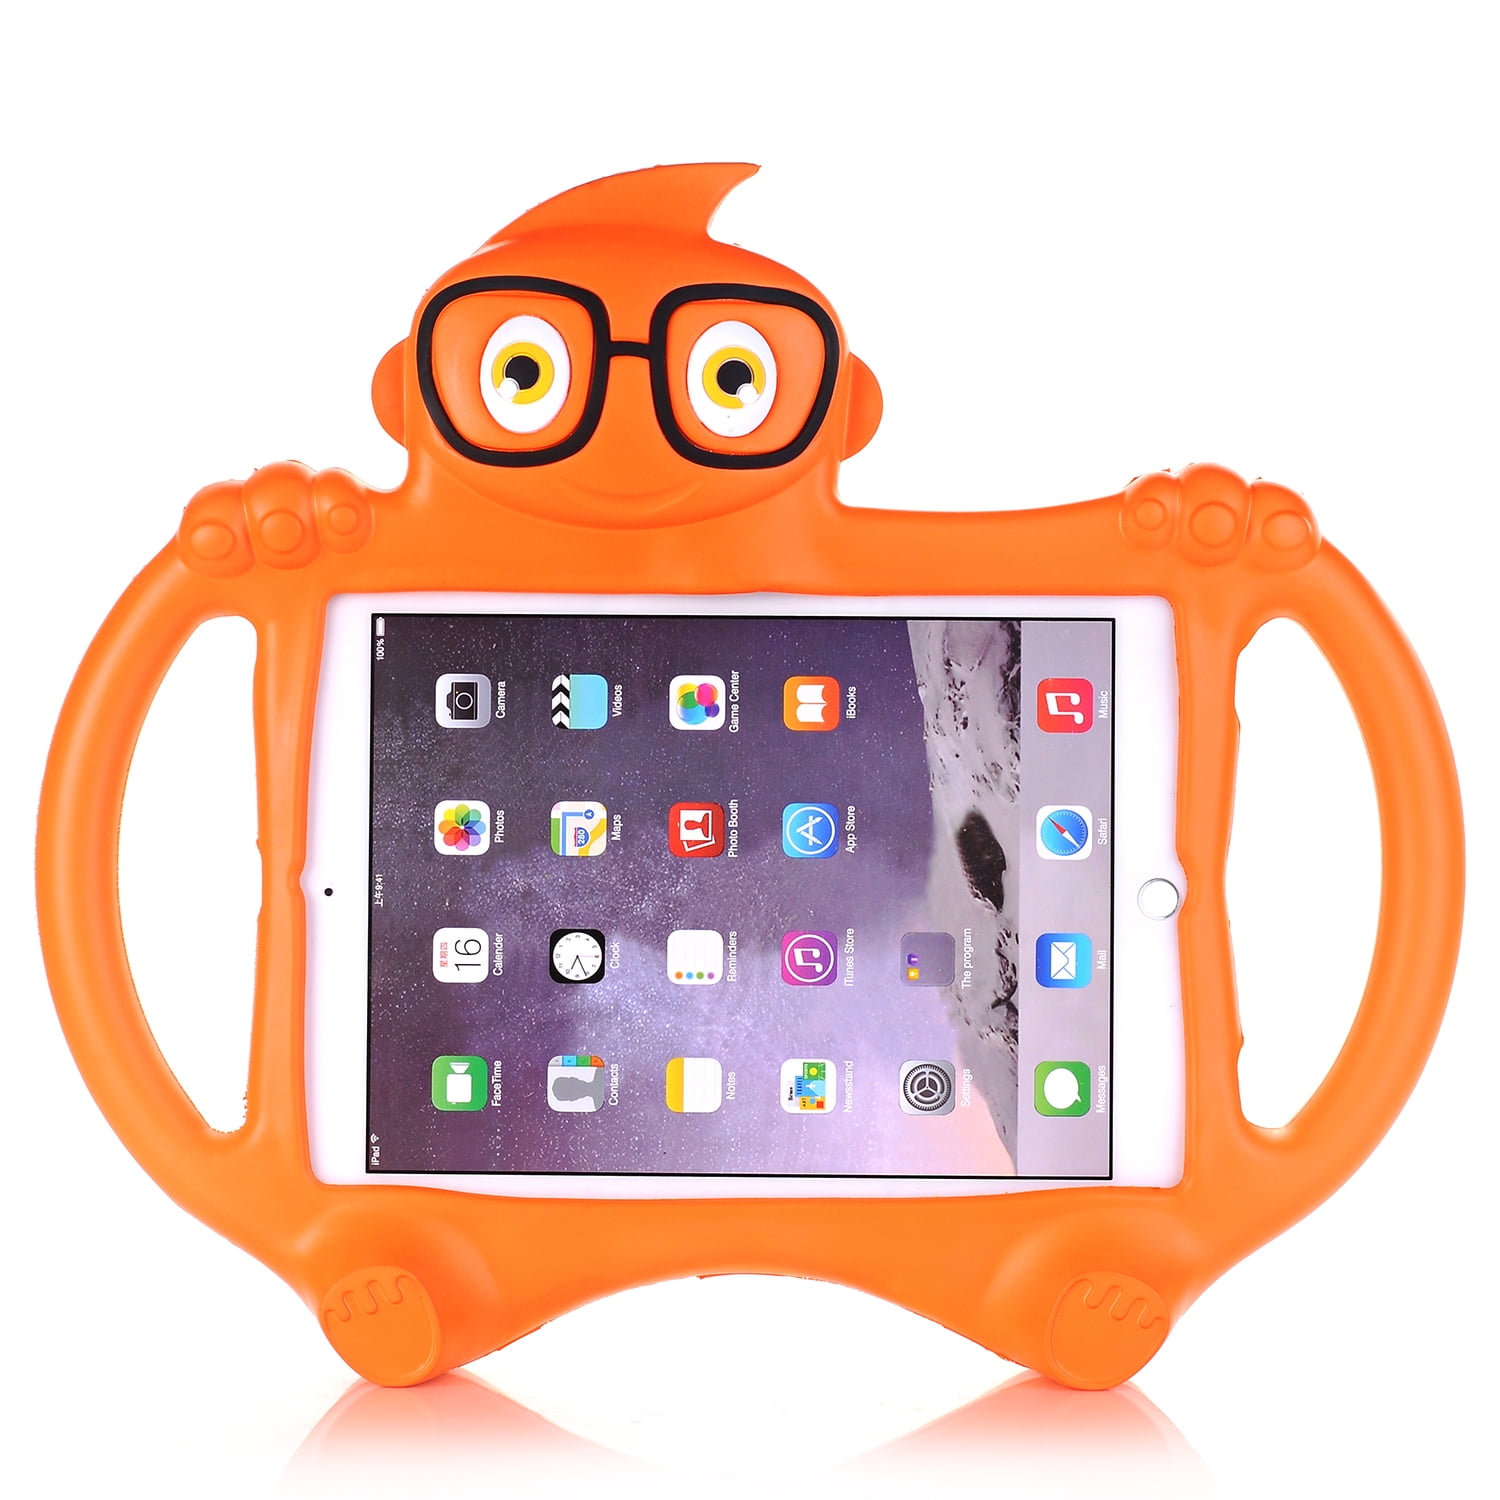 Ventouse Orange pour iPad 4 / mini 1/2/3 / / / iMac